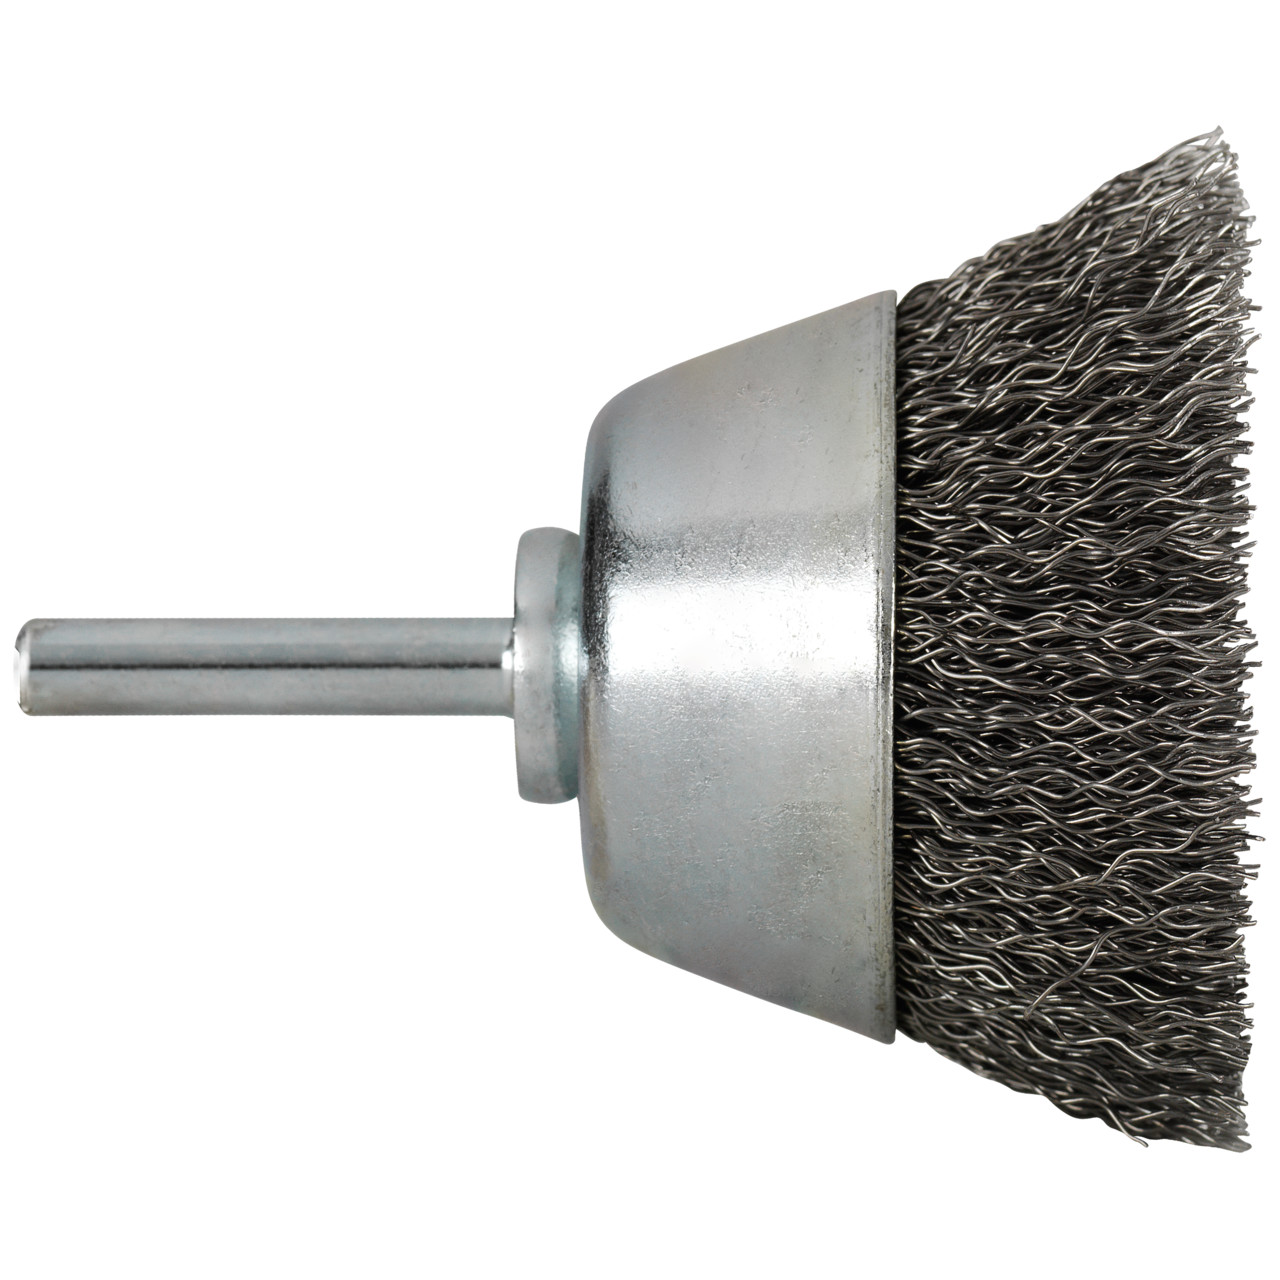 Tyrolit Spazzole a tazza DxLxH-GExI 40x10x15-6x30 Per acciaio, forma: 52TDW - (spazzole a tazza), Art. 890753